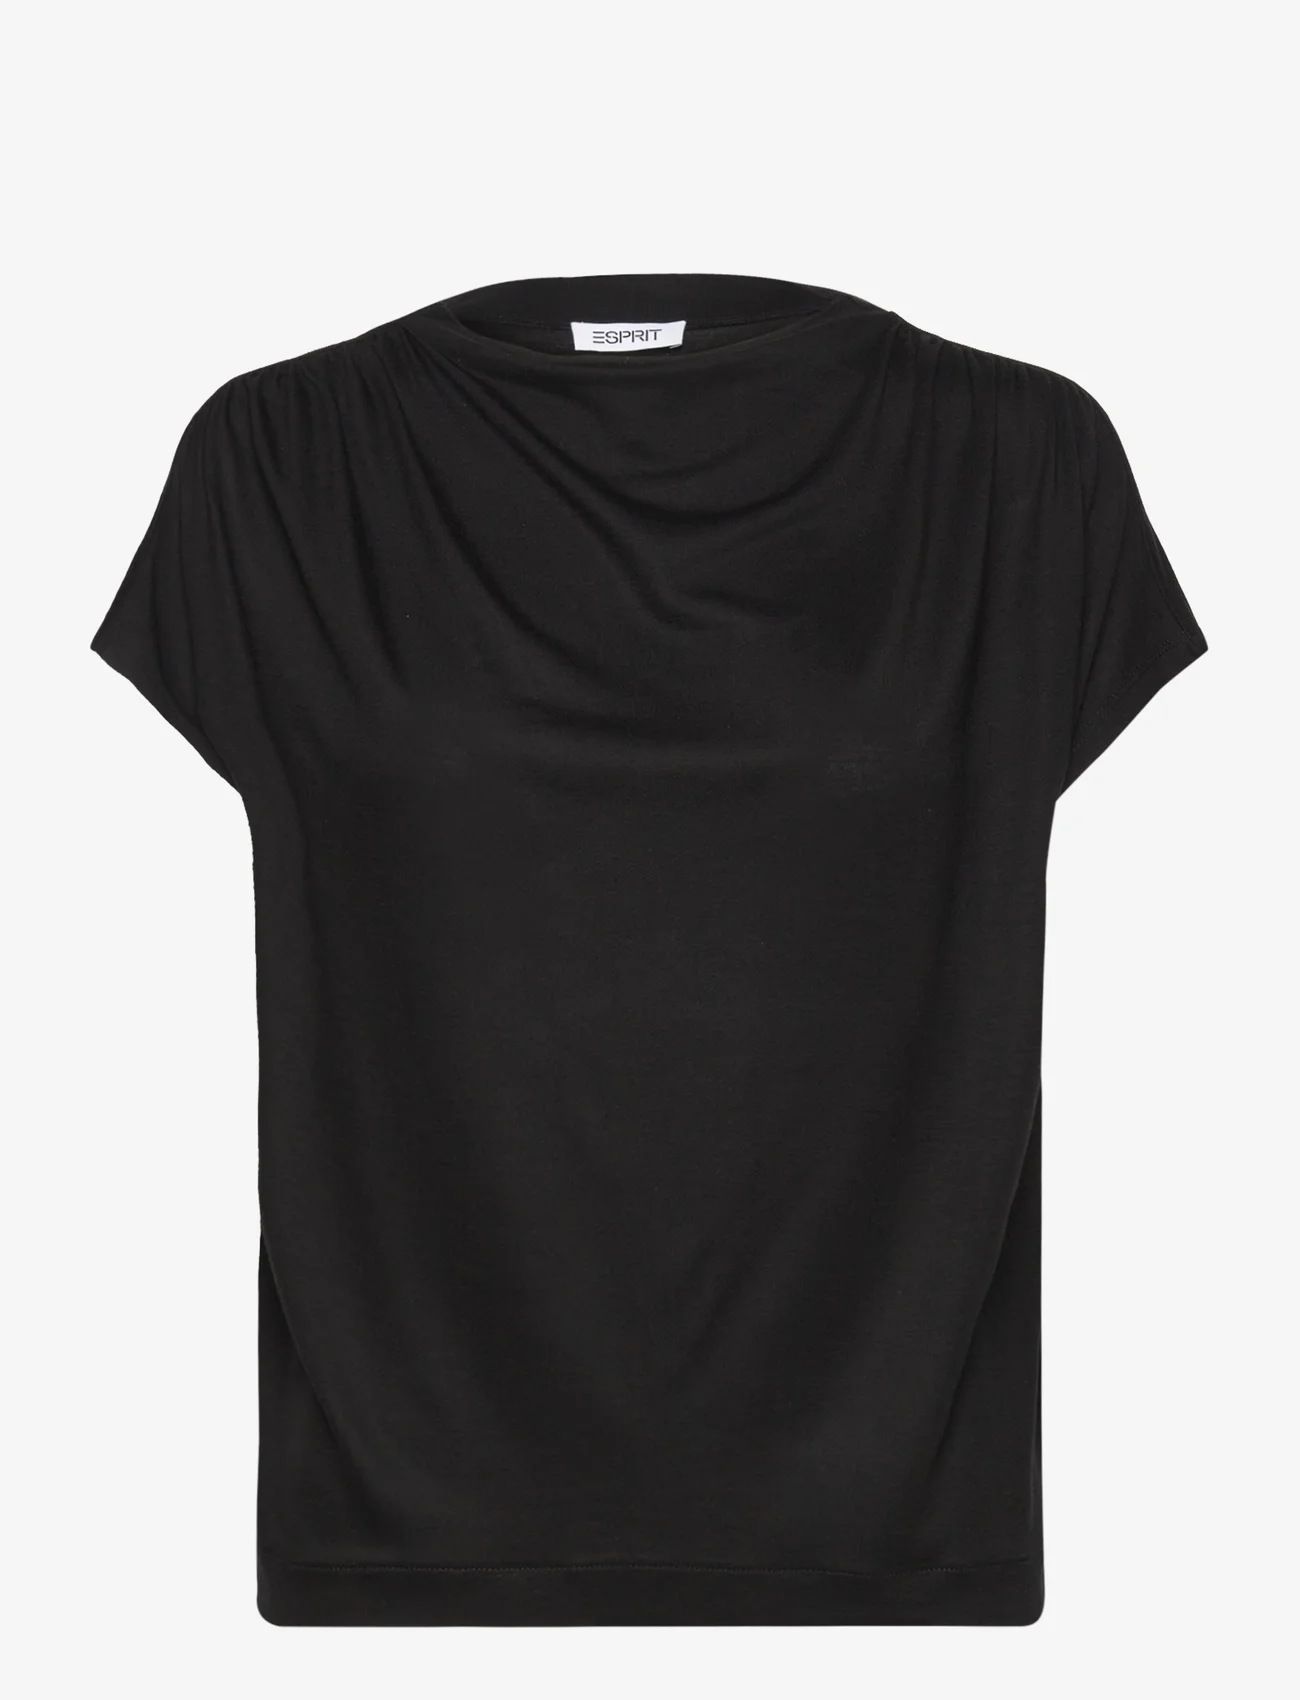 Esprit Casual - T-Shirts - t-shirts - black - 0